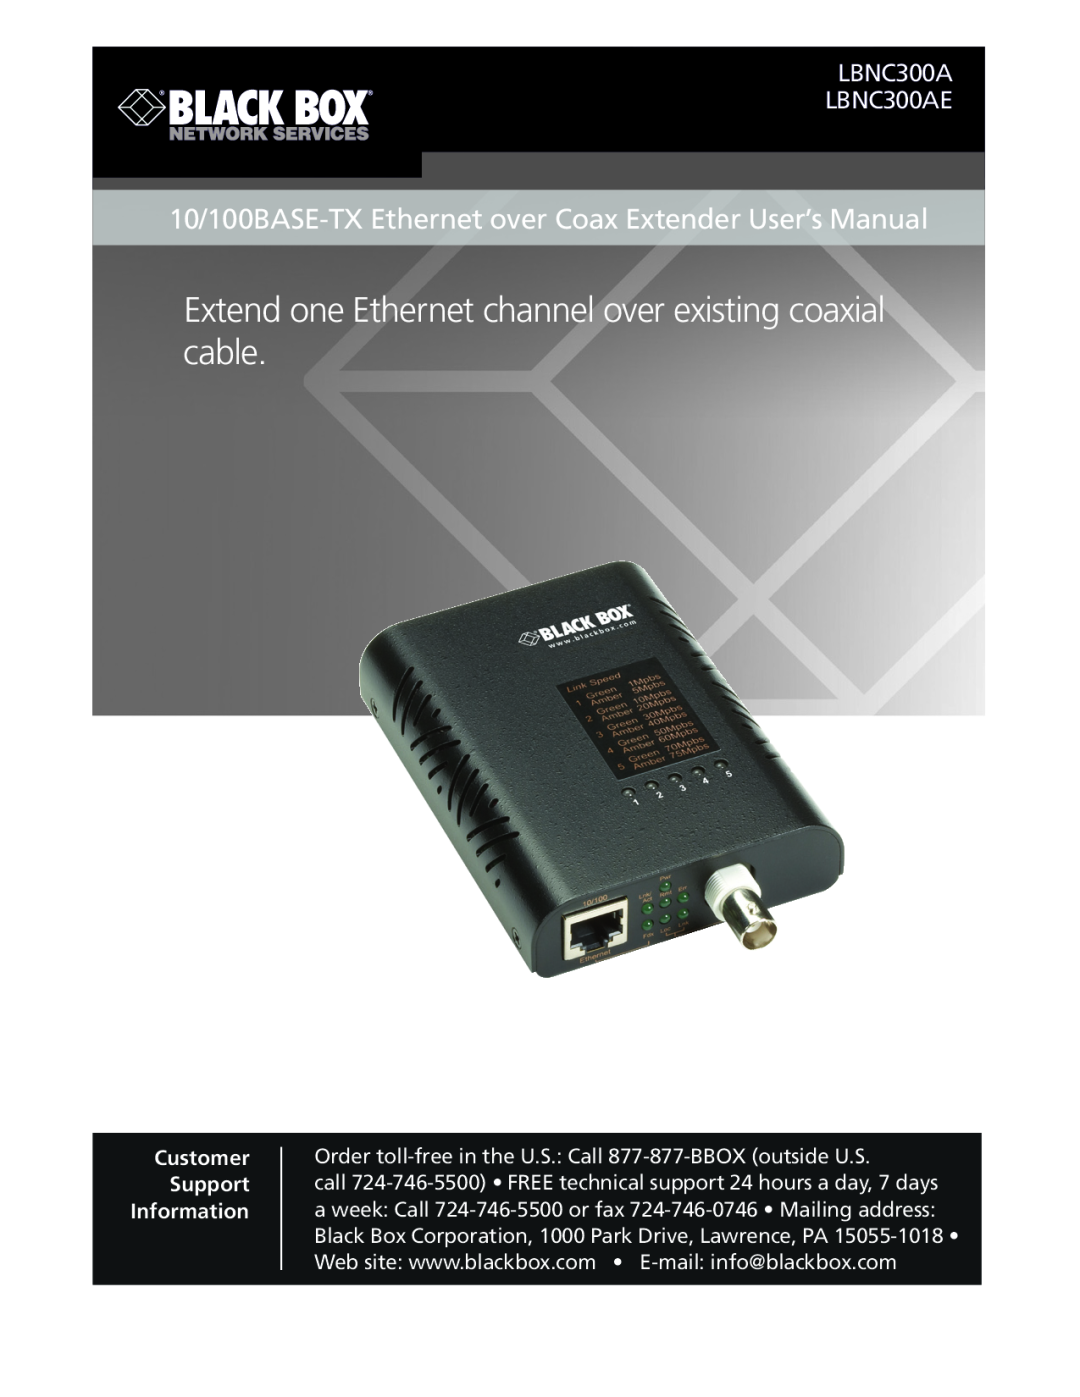 Black Box 10/100BASE-TX Ethernet over Coax Extender user manual LBNC300A LBNC300AE, Customer Support Information 